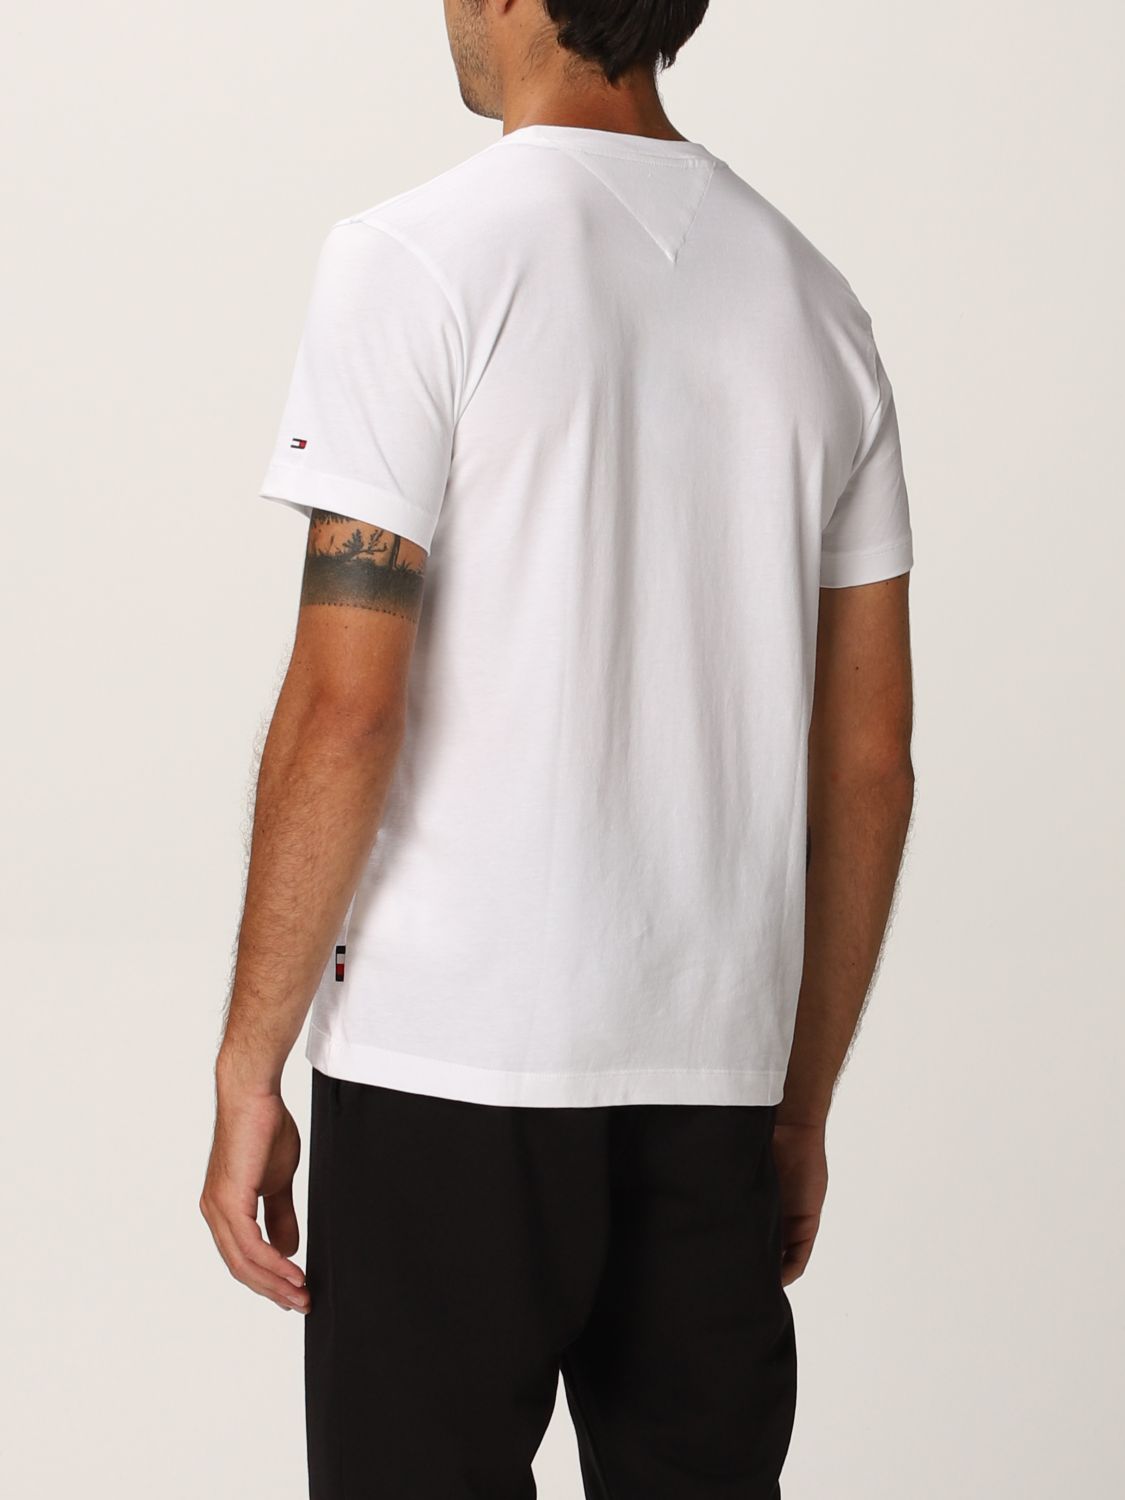 NWT TOMMY HILFIGER Men's Short Sleeve Crew Neck Logo T-Shirt Tee S M L XL XXL 